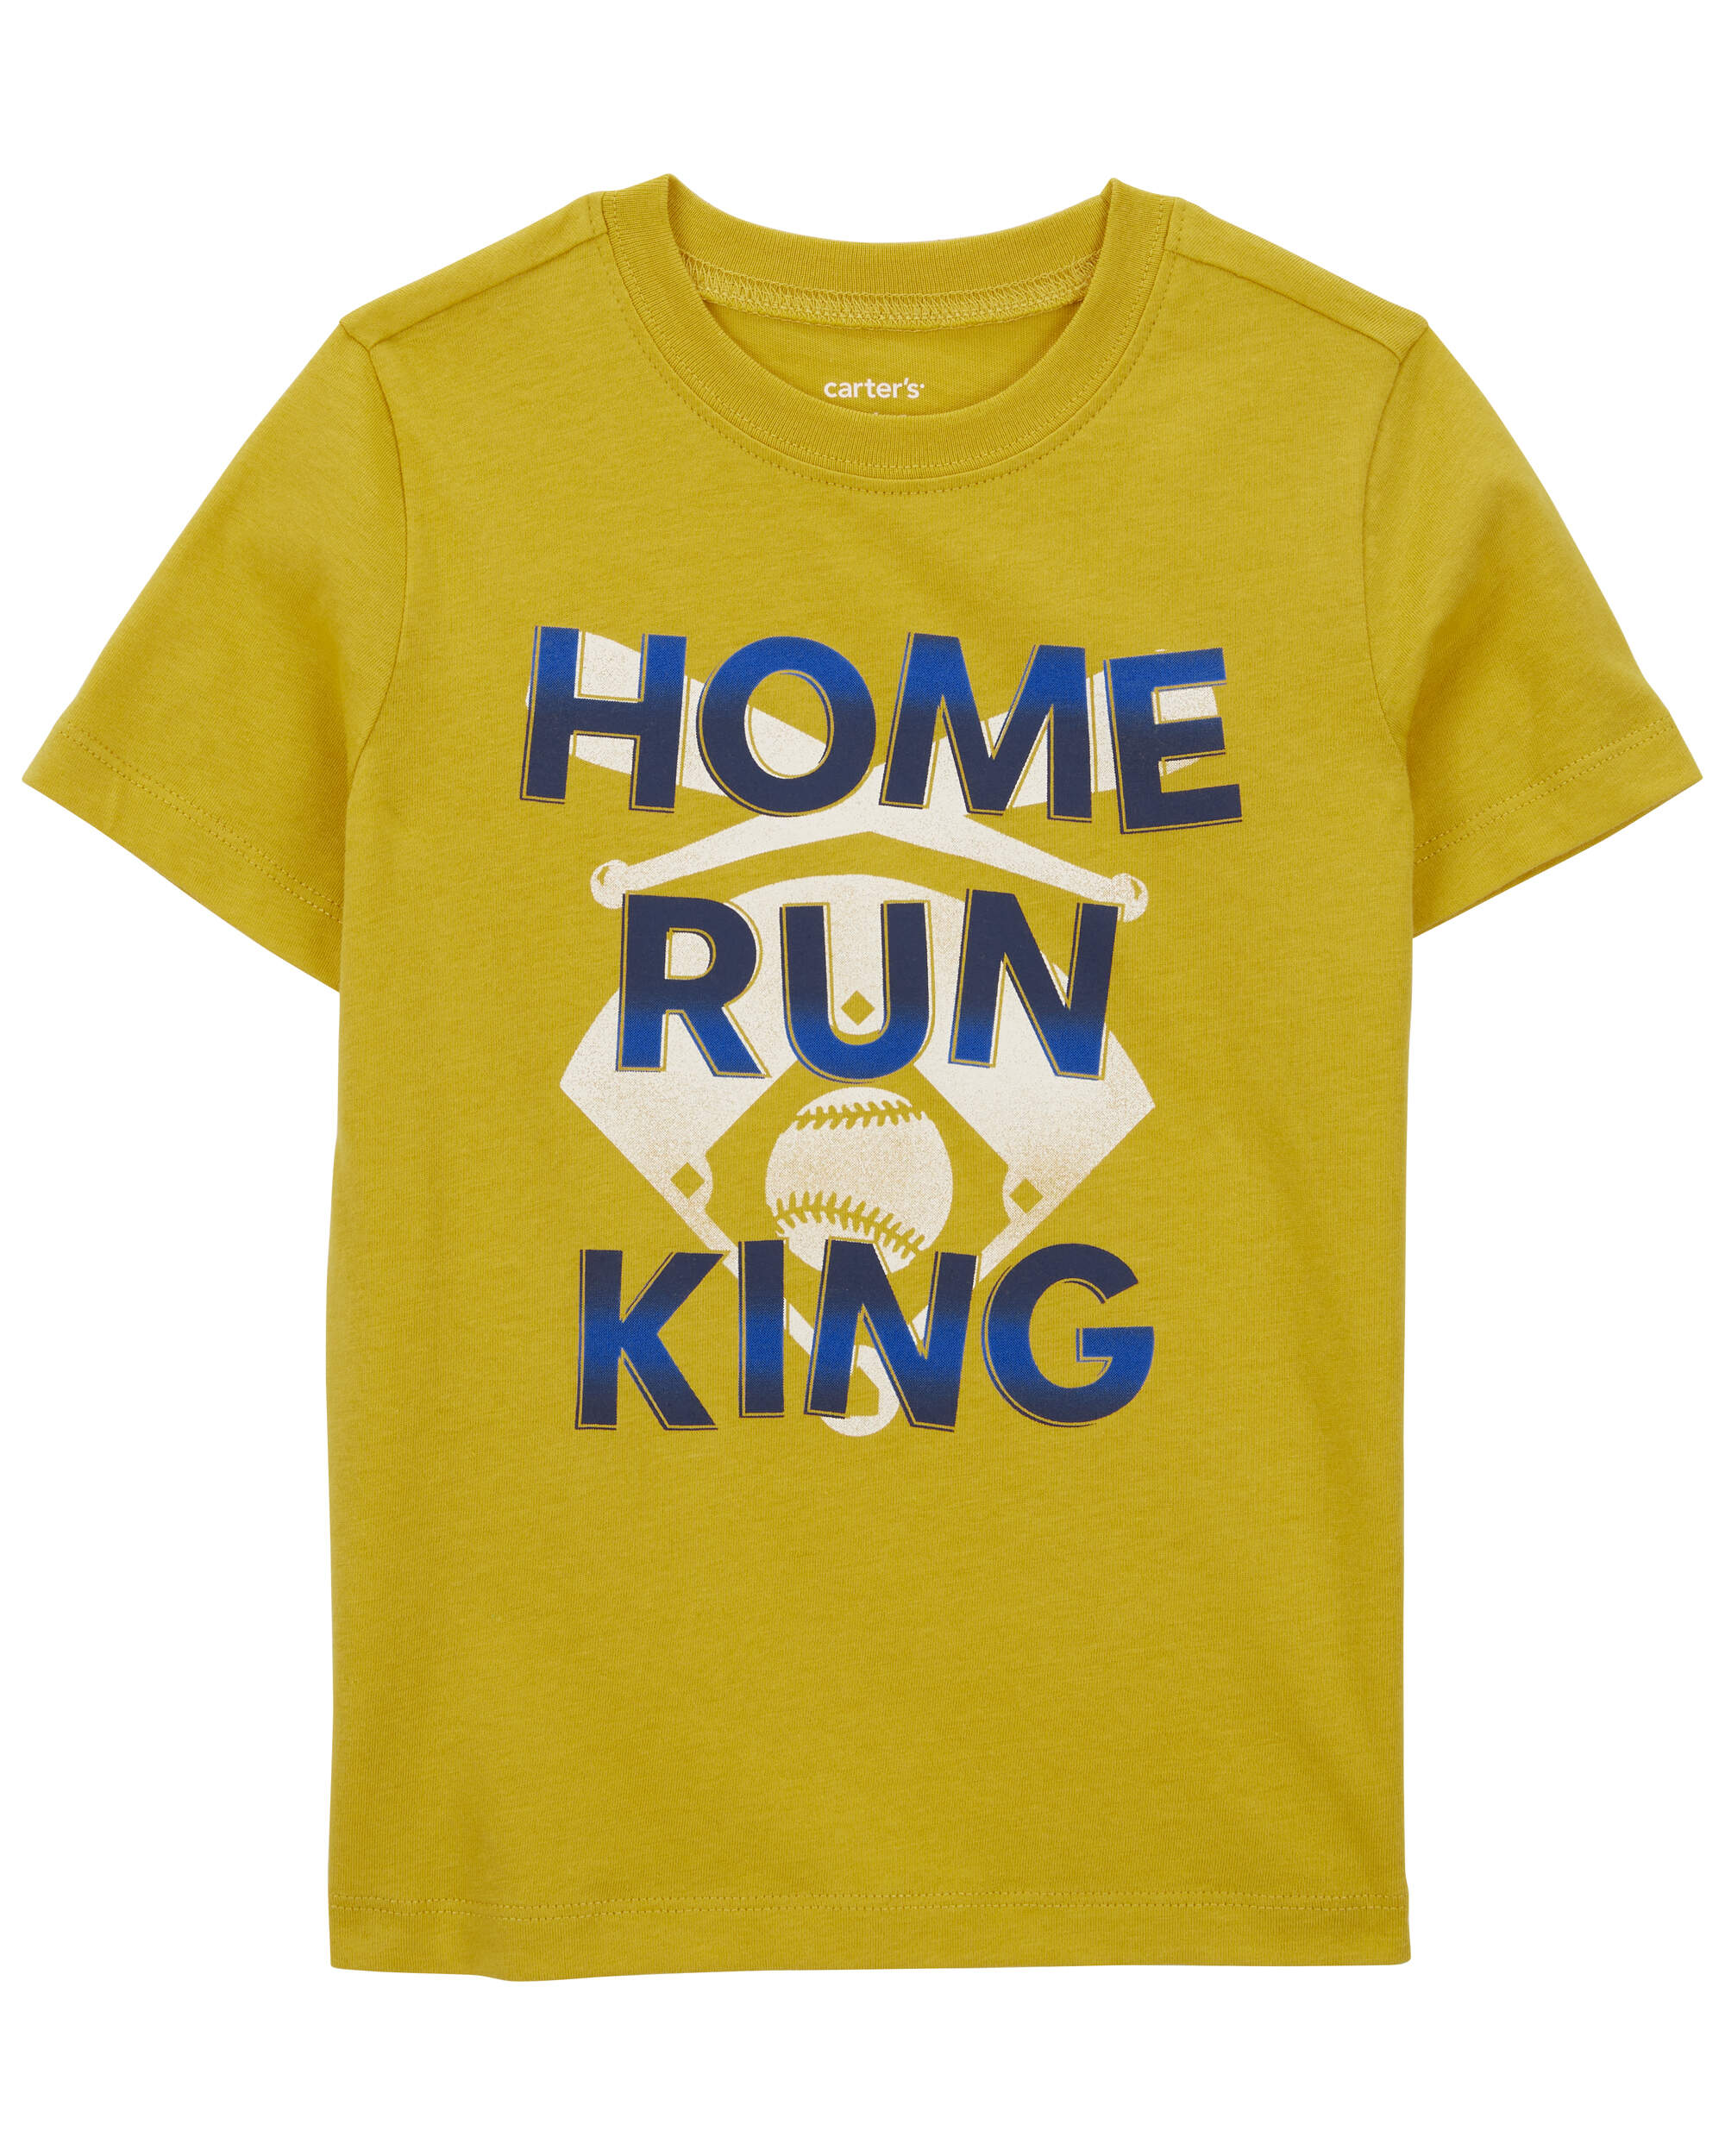 Toddler Home Run King Graphic Tee